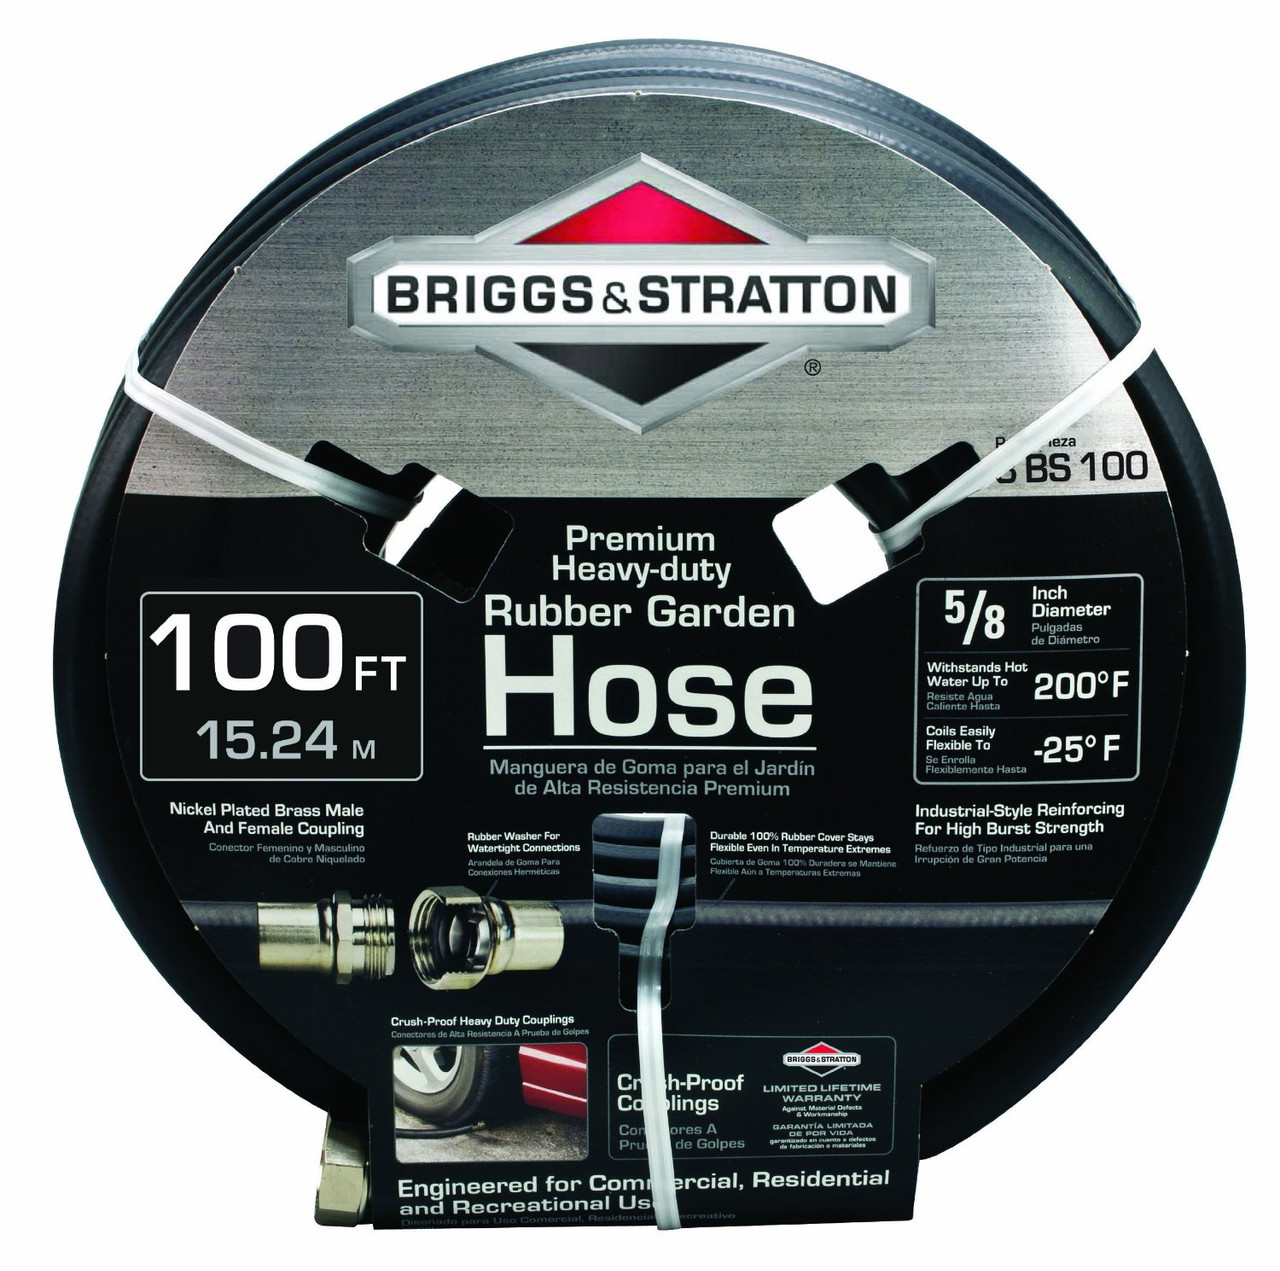 Briggs and Stratton 8BS100 100-Foot Premium Heavy-Duty Rubber Garden Hose